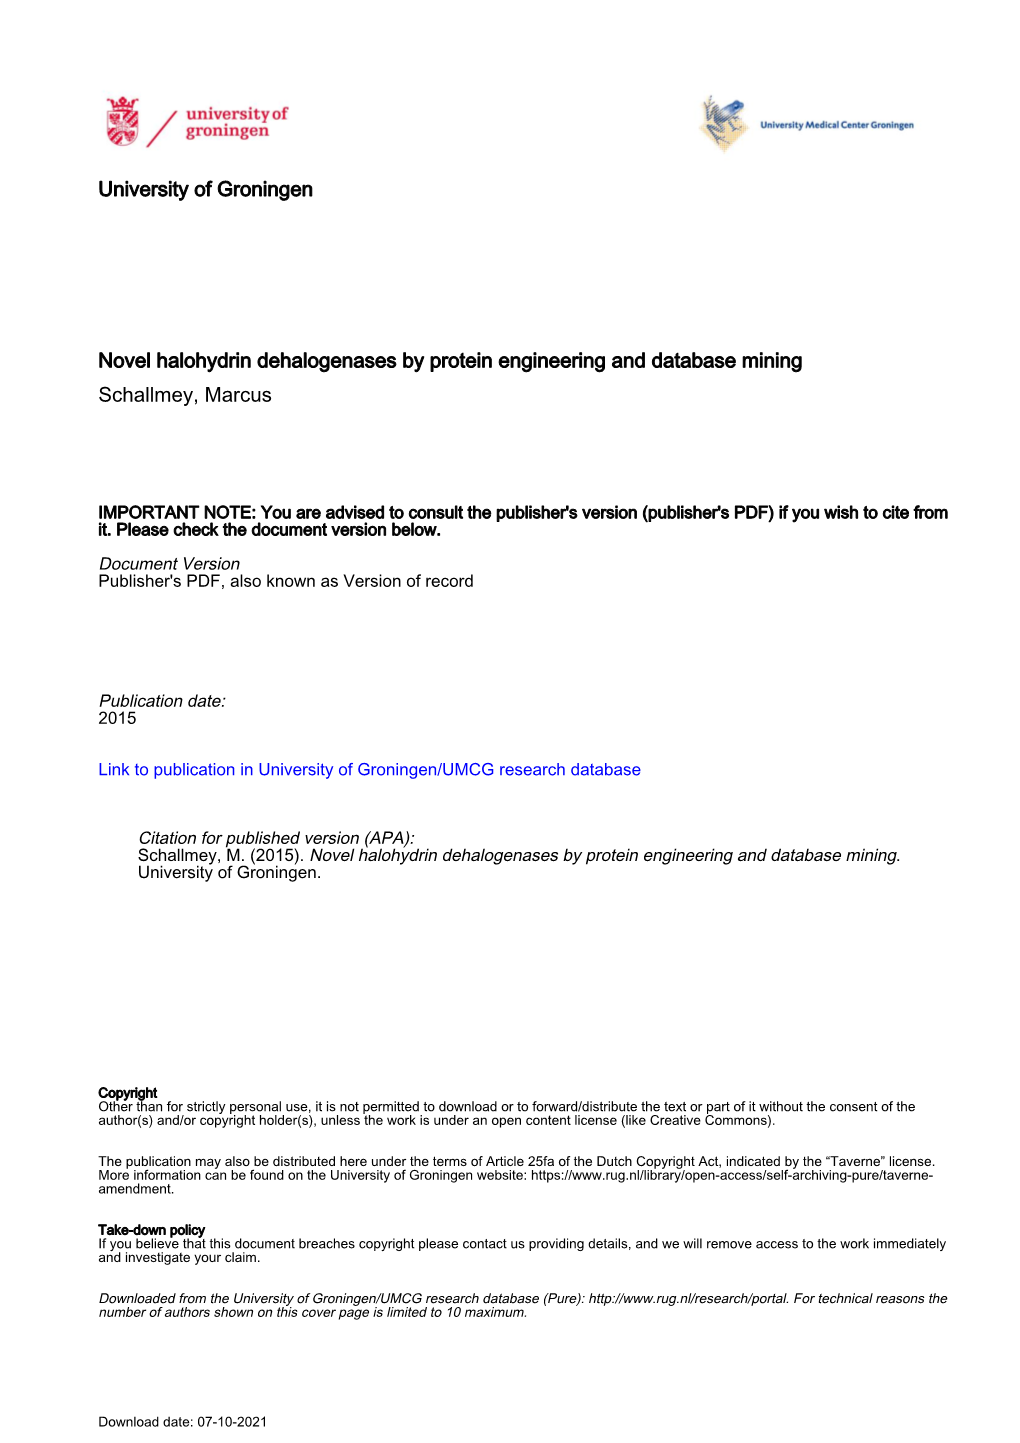 University of Groningen Novel Halohydrin Dehalogenases By